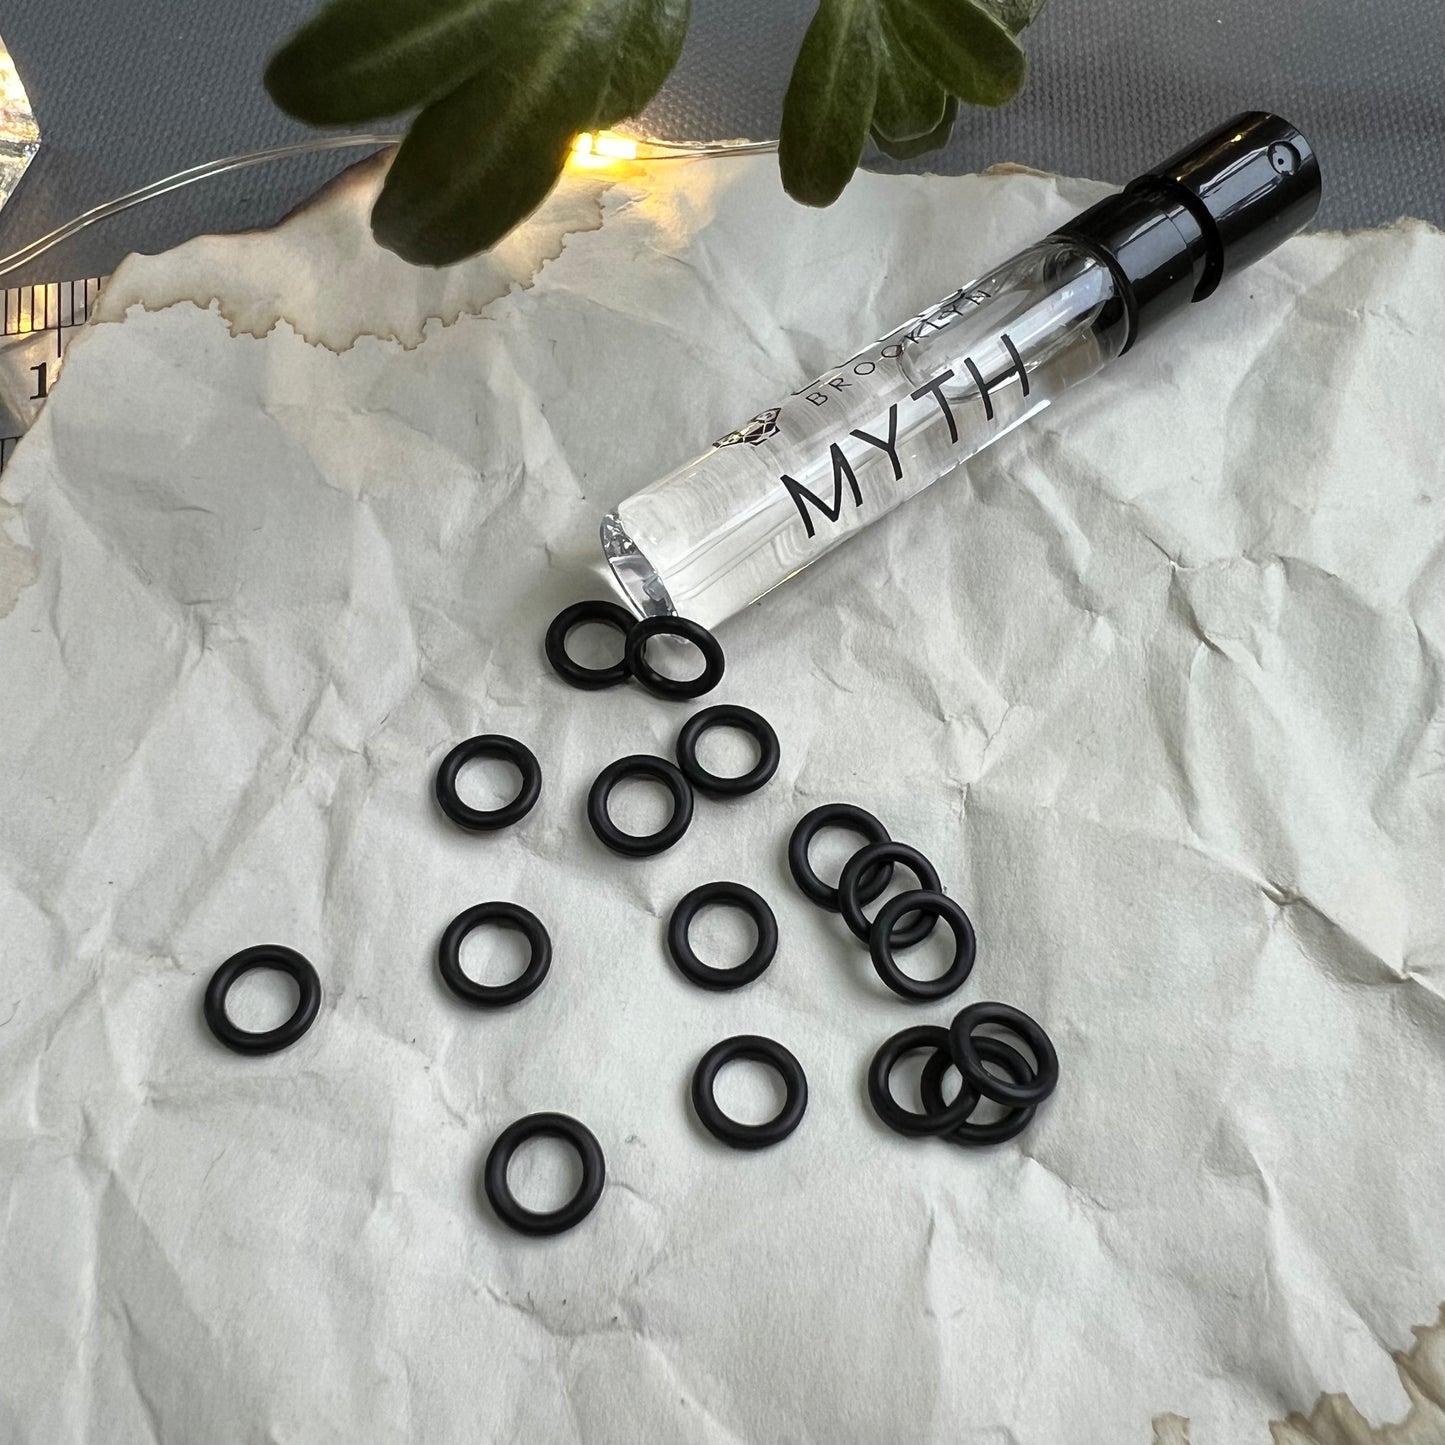 6.6mm Rubber O-Rings (ID: 3.5mm) - Black